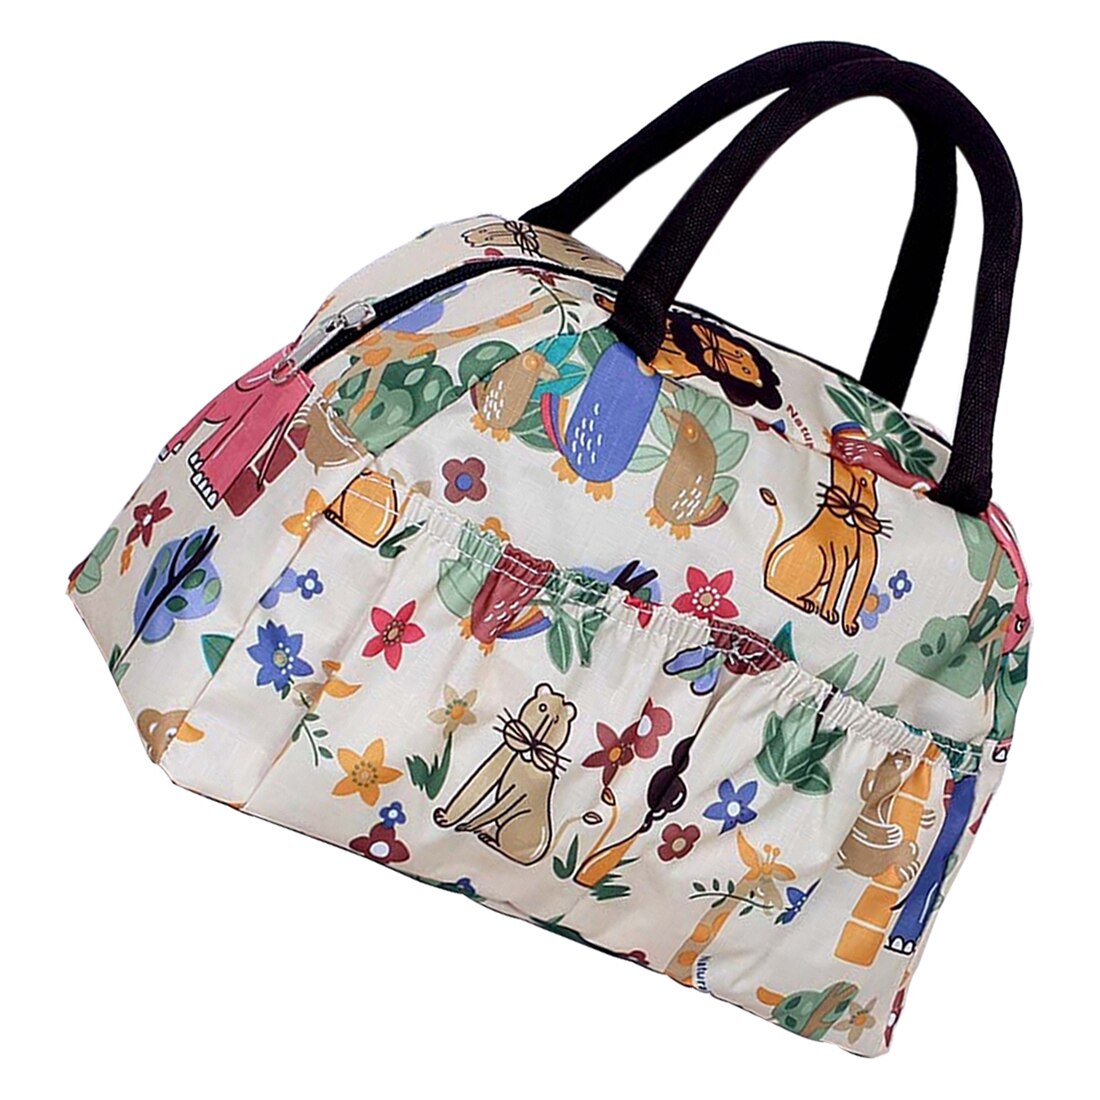 New Fashion Lady Women Handbags lunch box bag(Style 3) - ebowsos